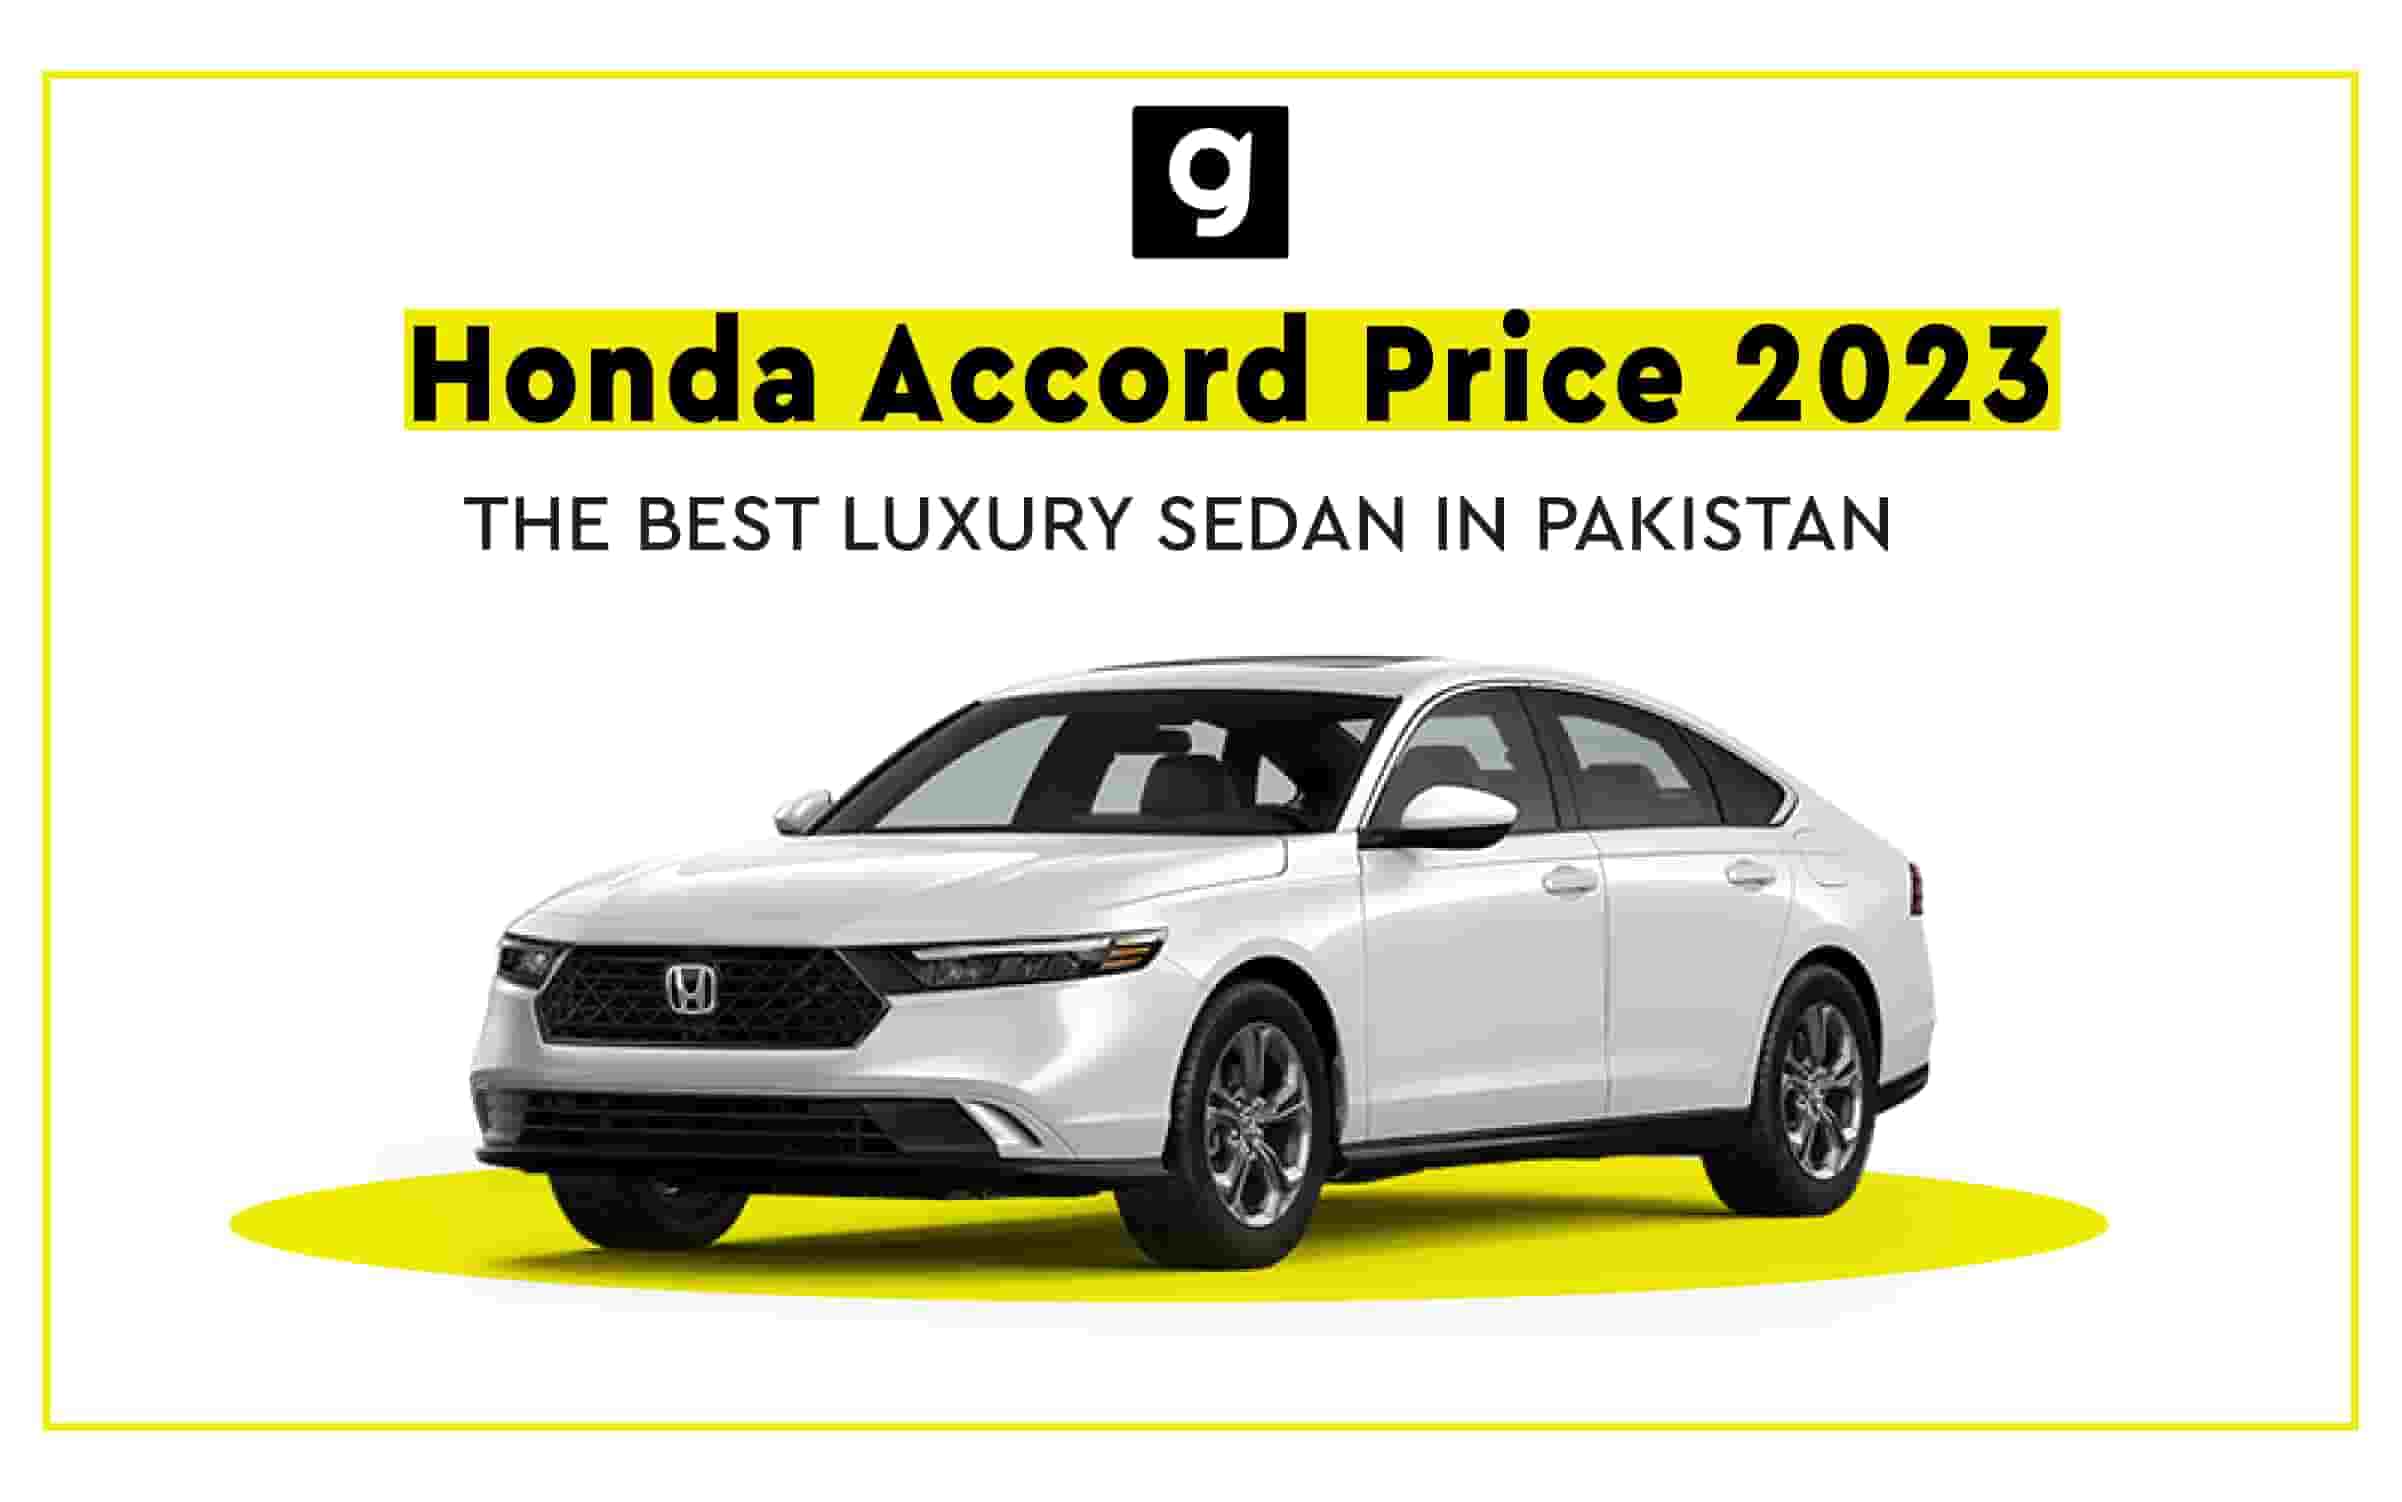 Honda Accord Price 2023: The Best Luxury Sedan in Pakistan